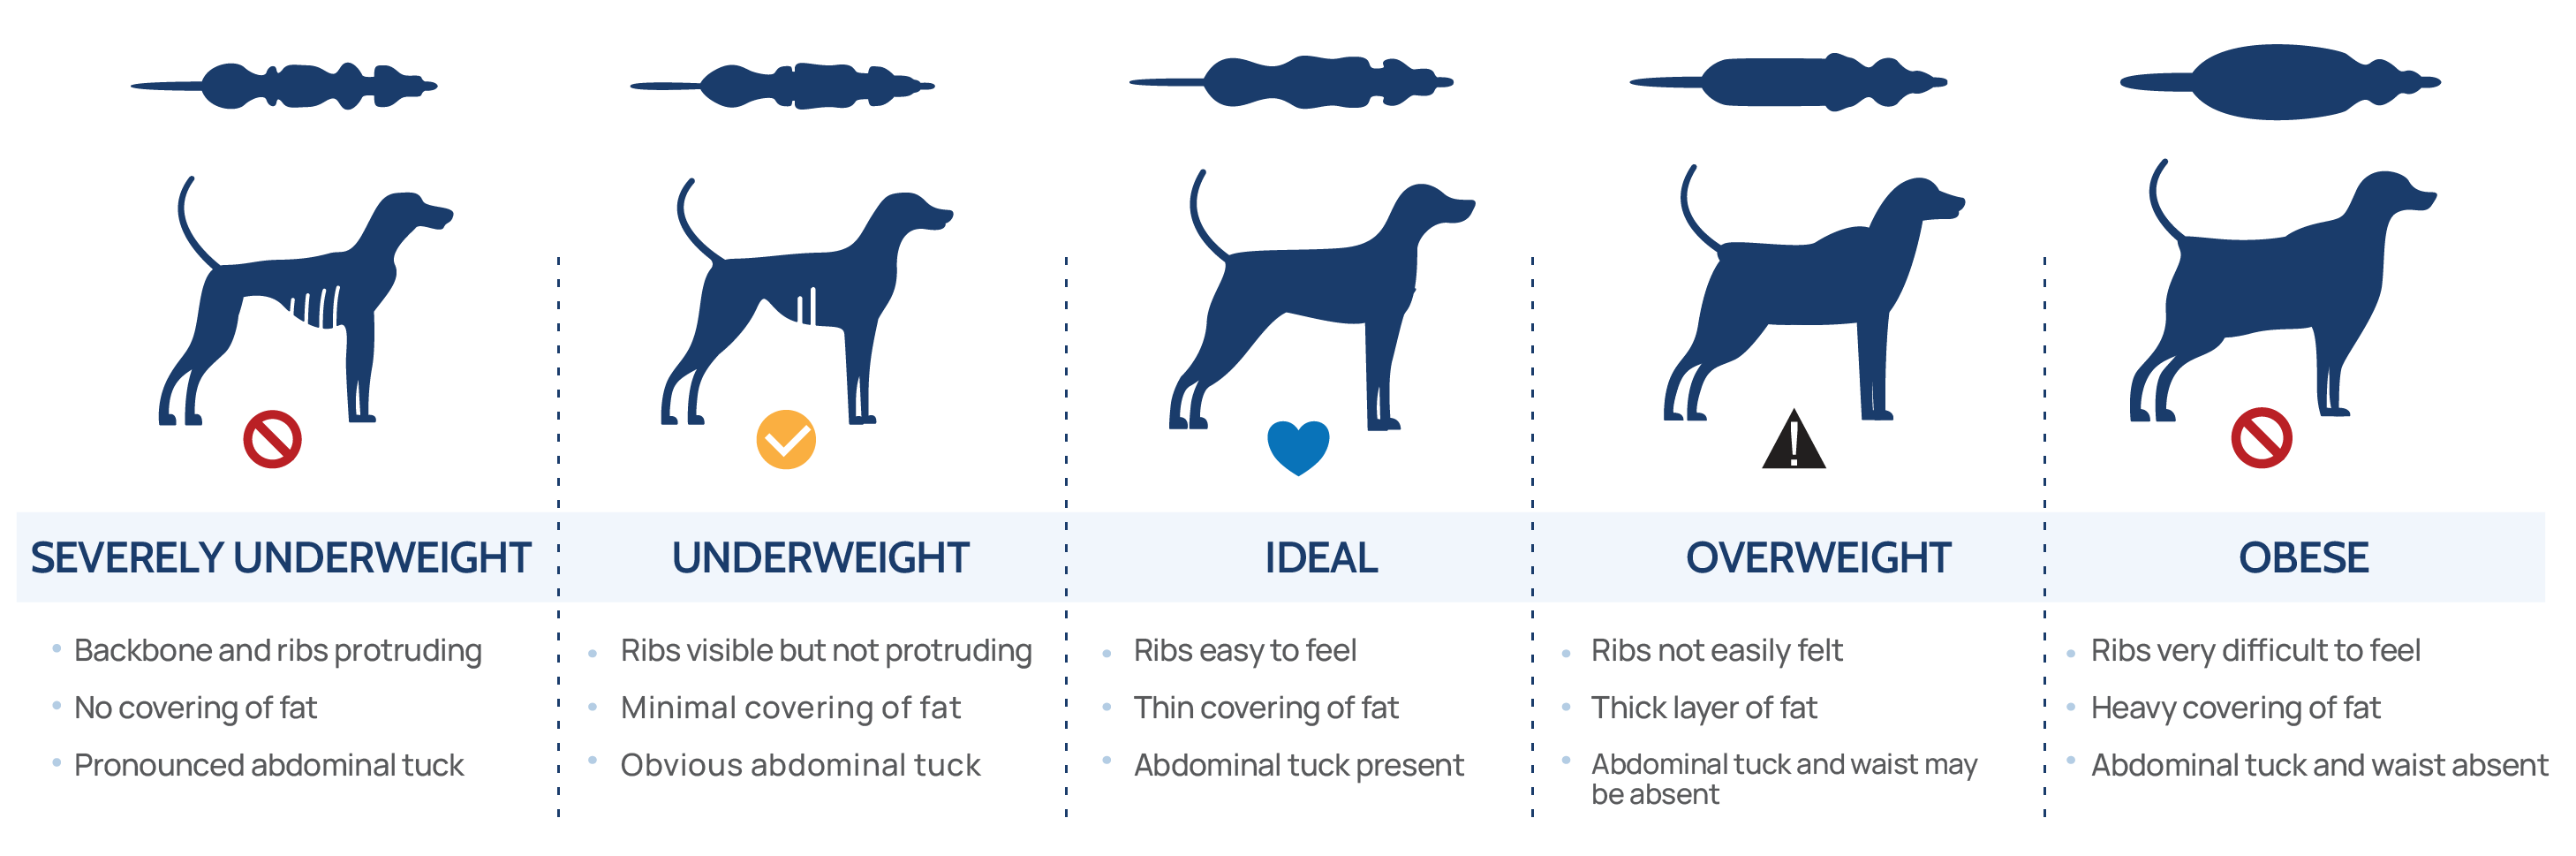 dog body healthy chart